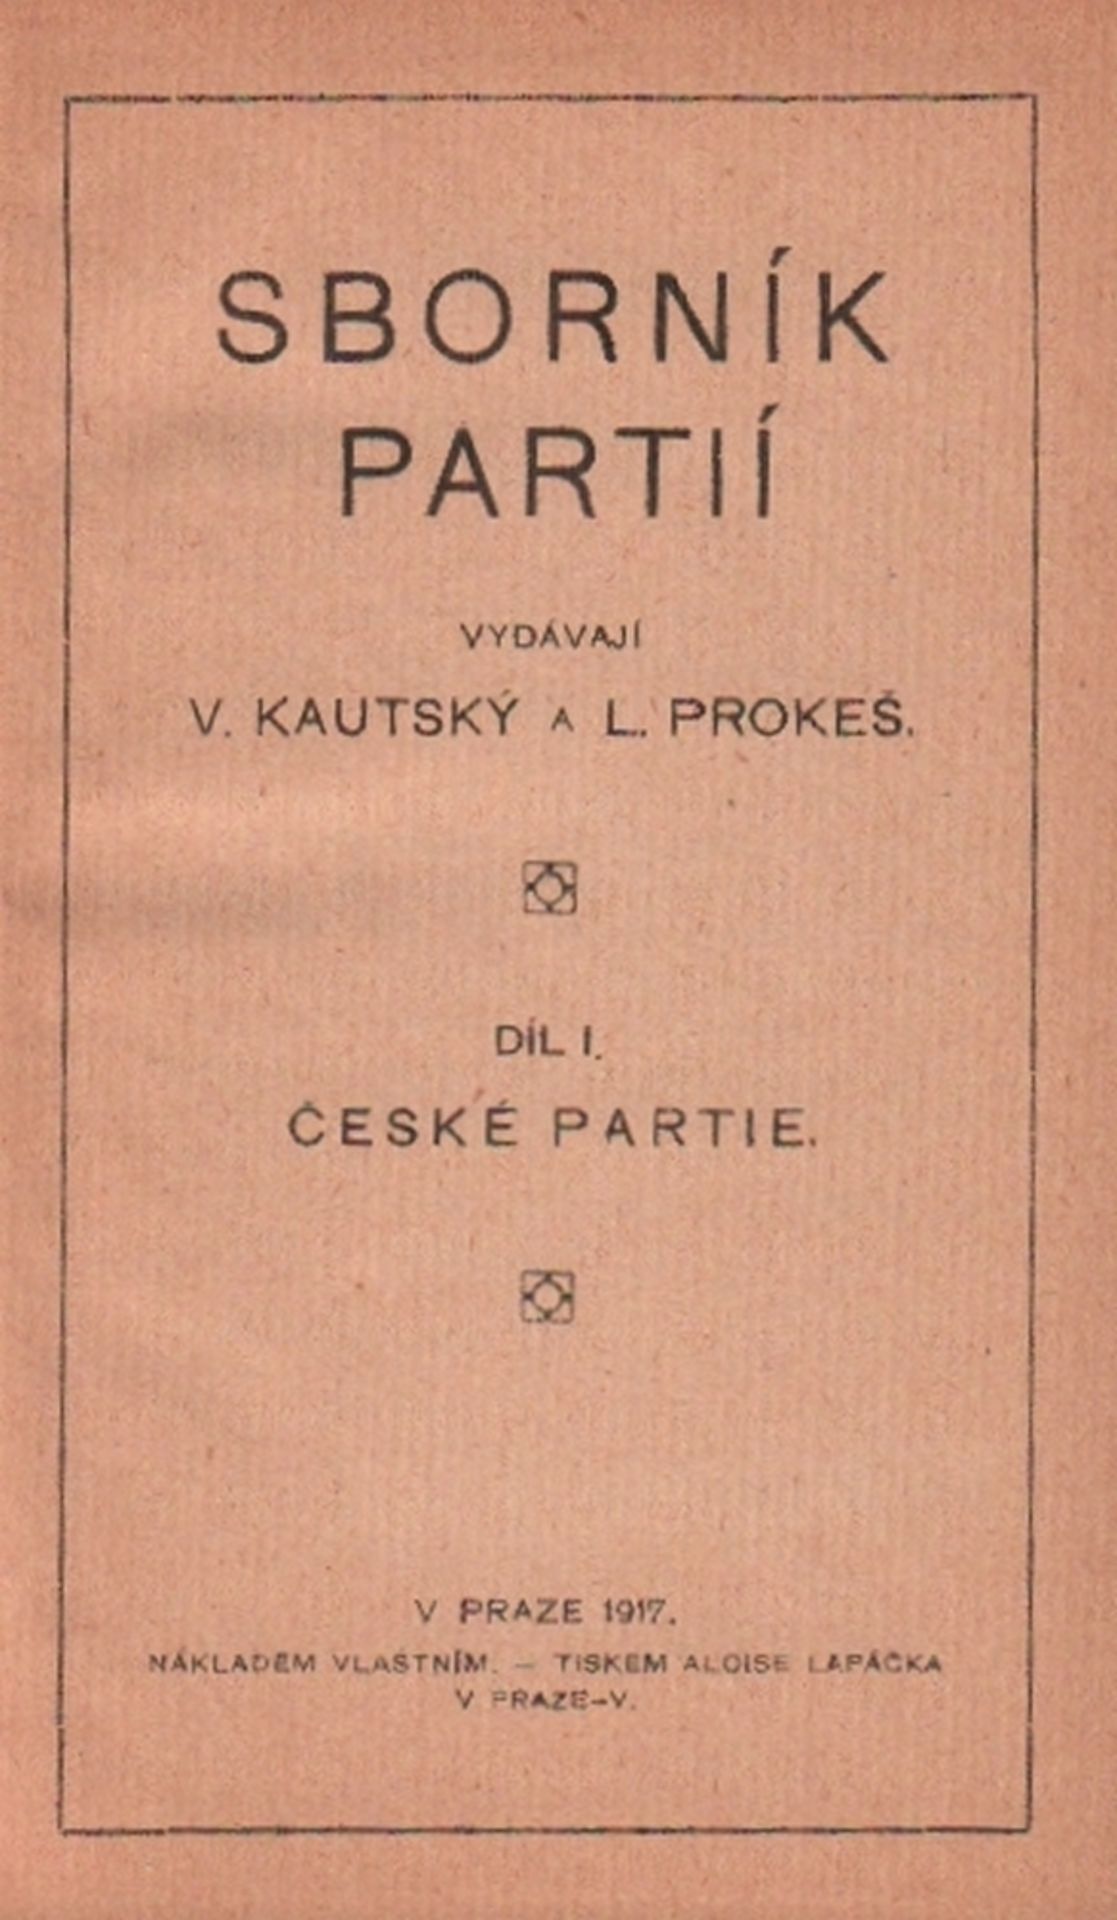 Kautský, V. und L. Prokes. Sborník partií. Díl I. Ceské partie. (Alles Erschienene) Prag, Selbstverl